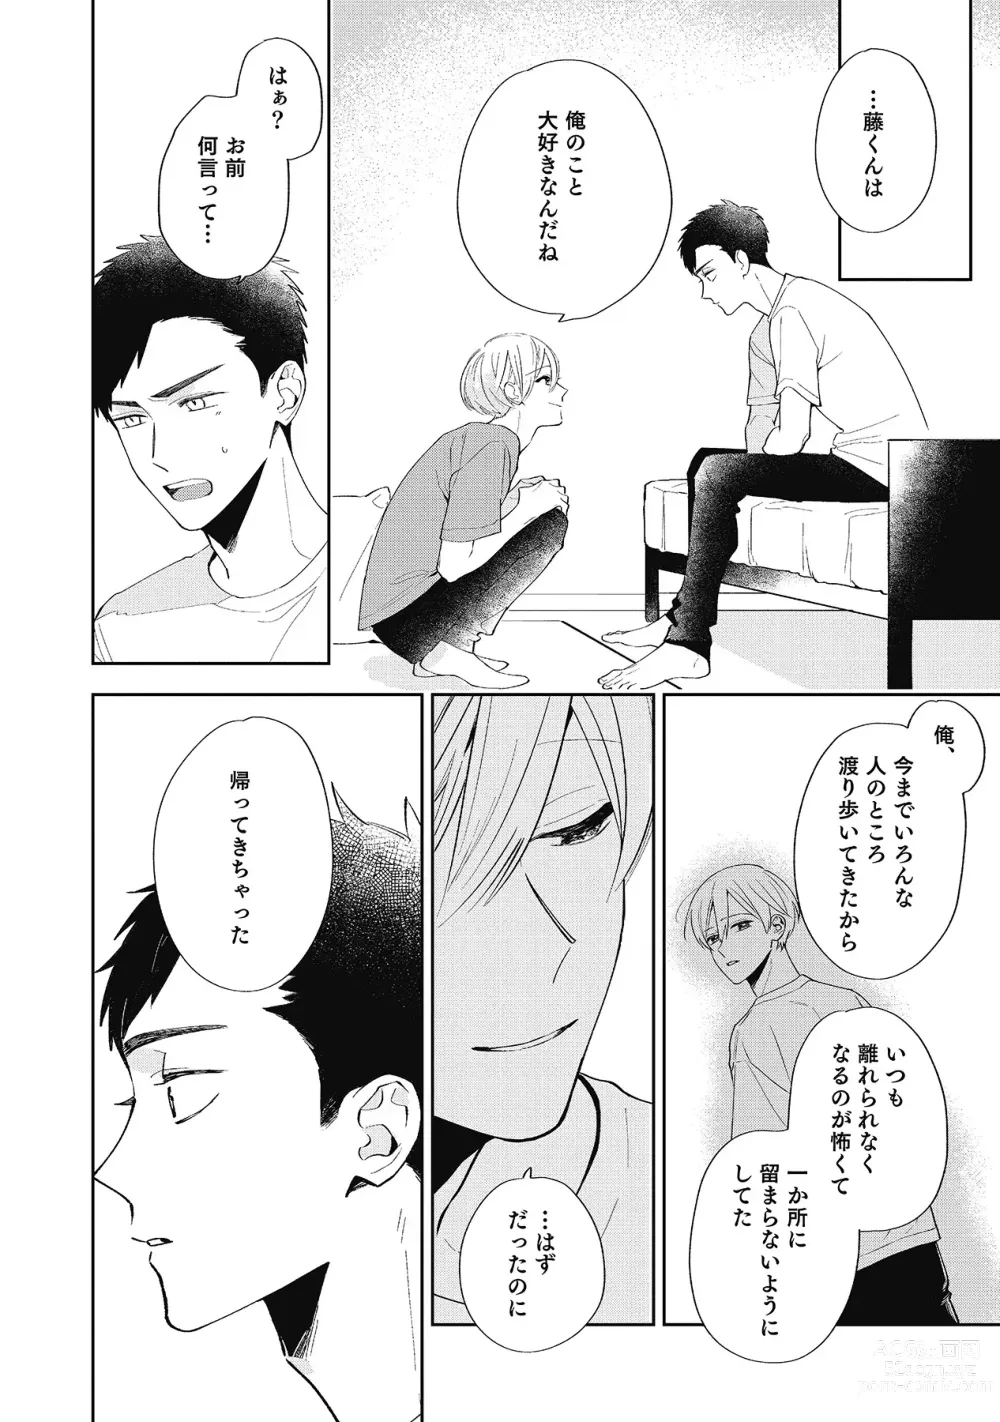 Page 152 of manga Sentimental Darling